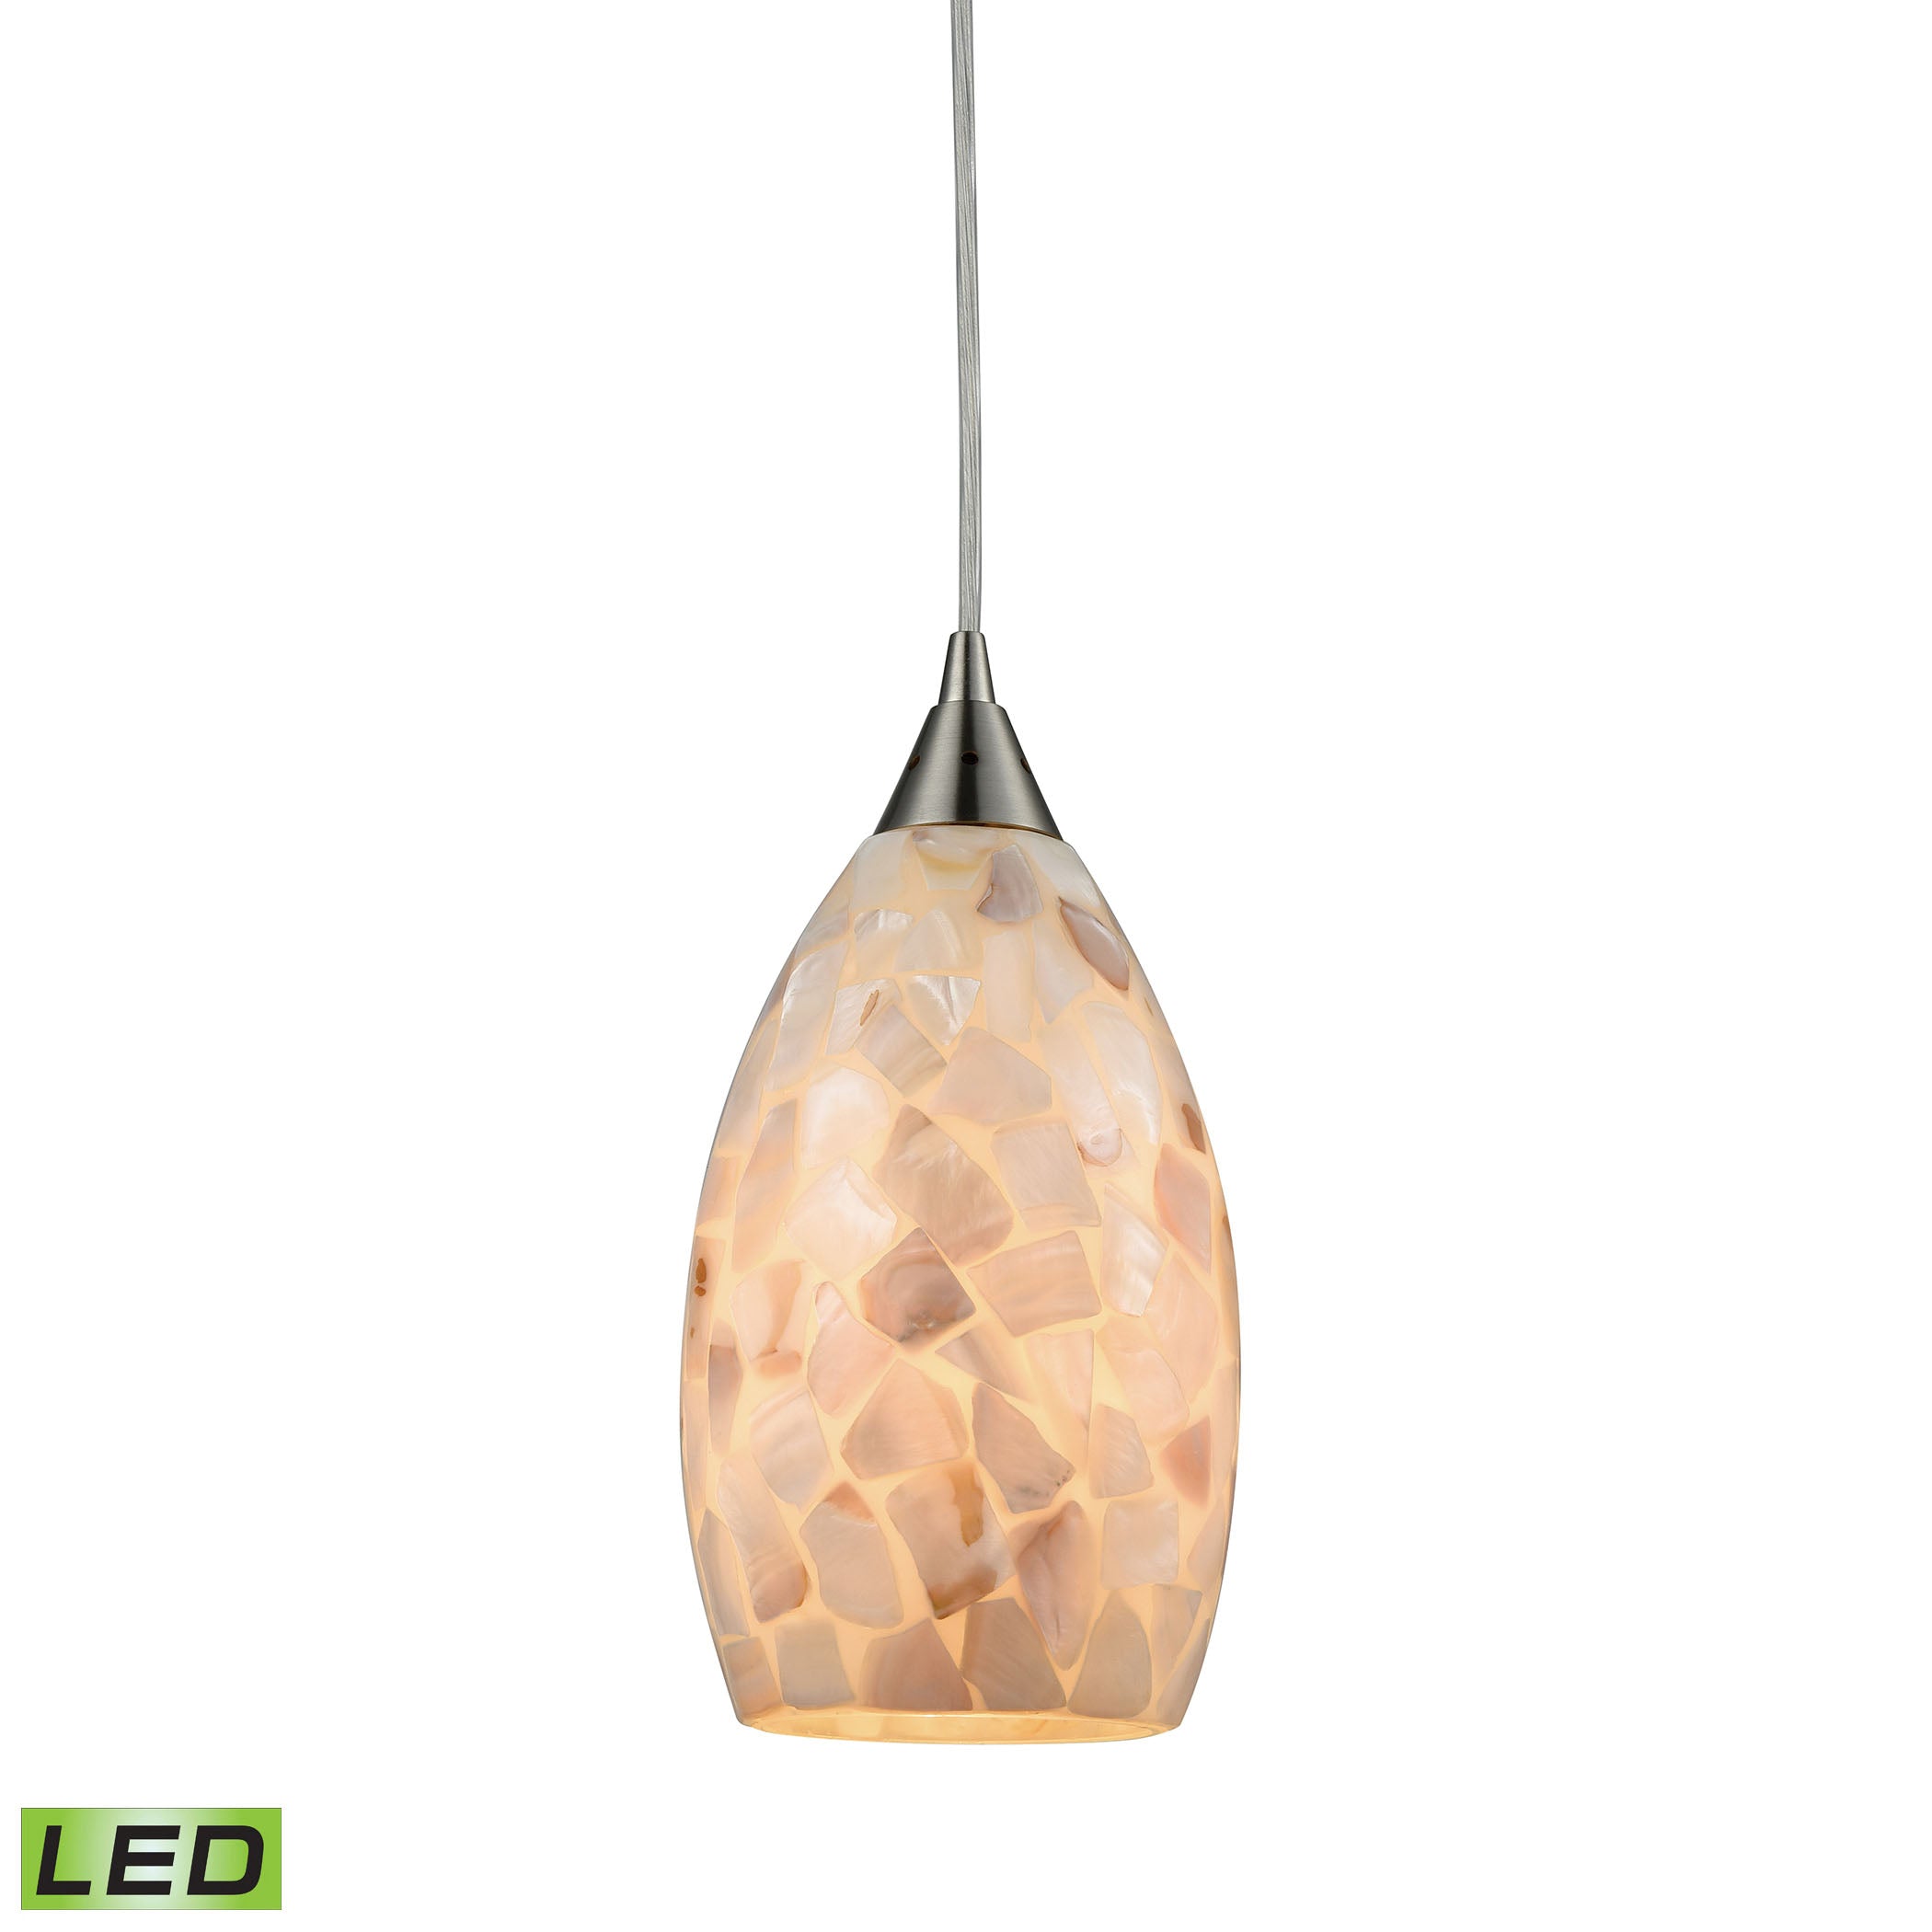 ELK Lighting 10443/1-LED Capri 1-Light Mini Pendant in Satin Nickel with Capiz Shell Glass - Includes LED Bulb